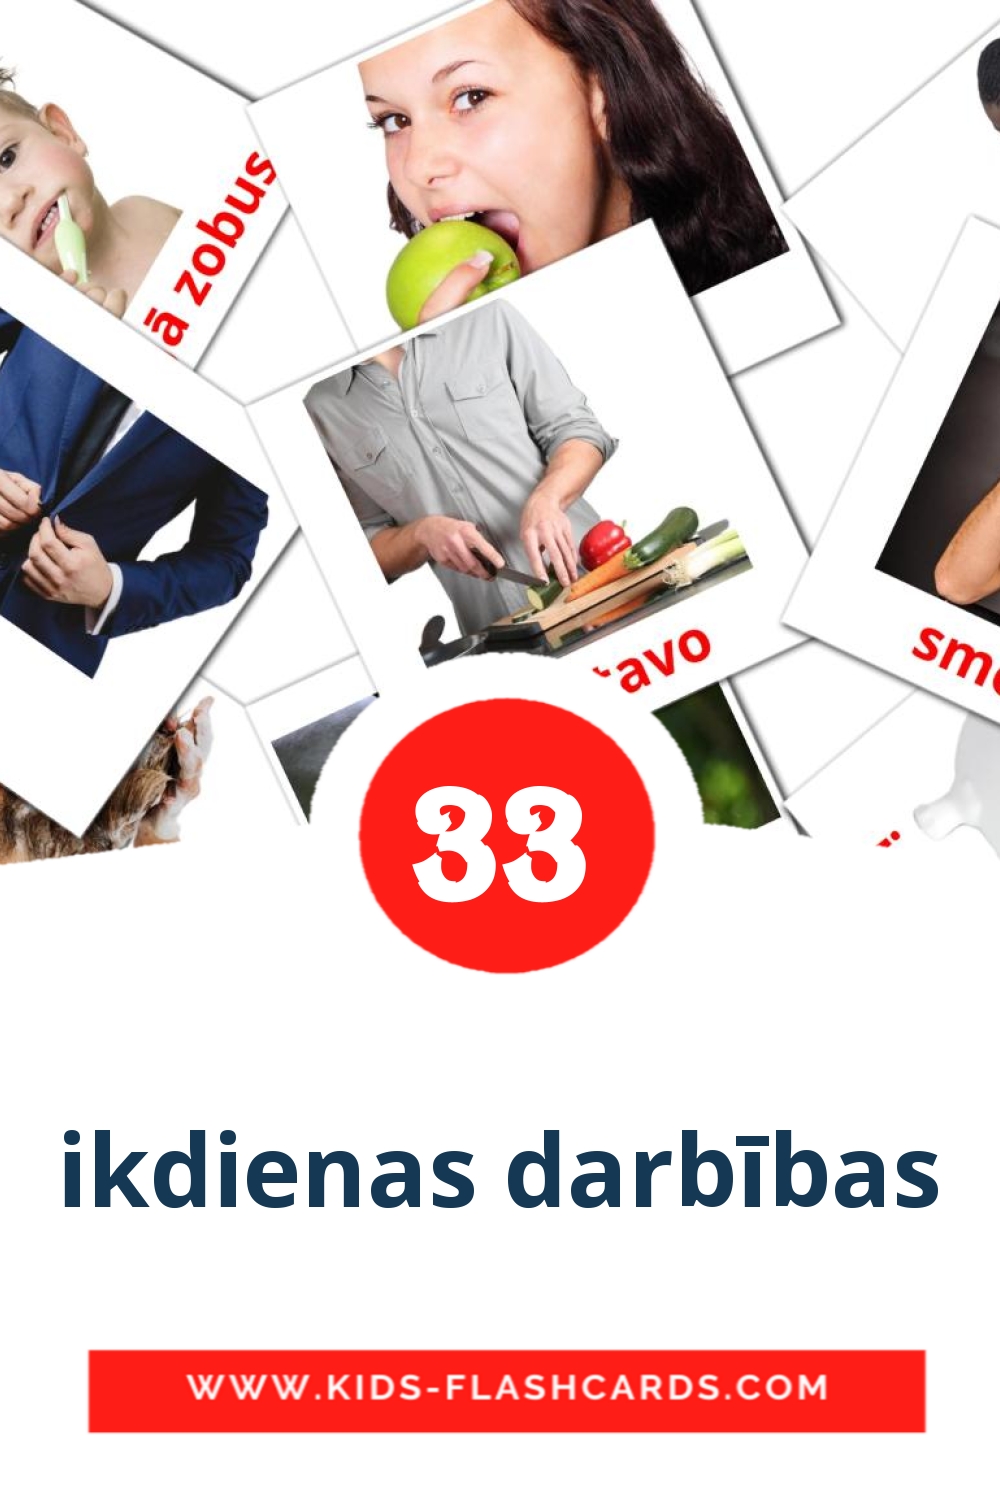 33 carte illustrate di ikdienas darbības per la scuola materna in lettone